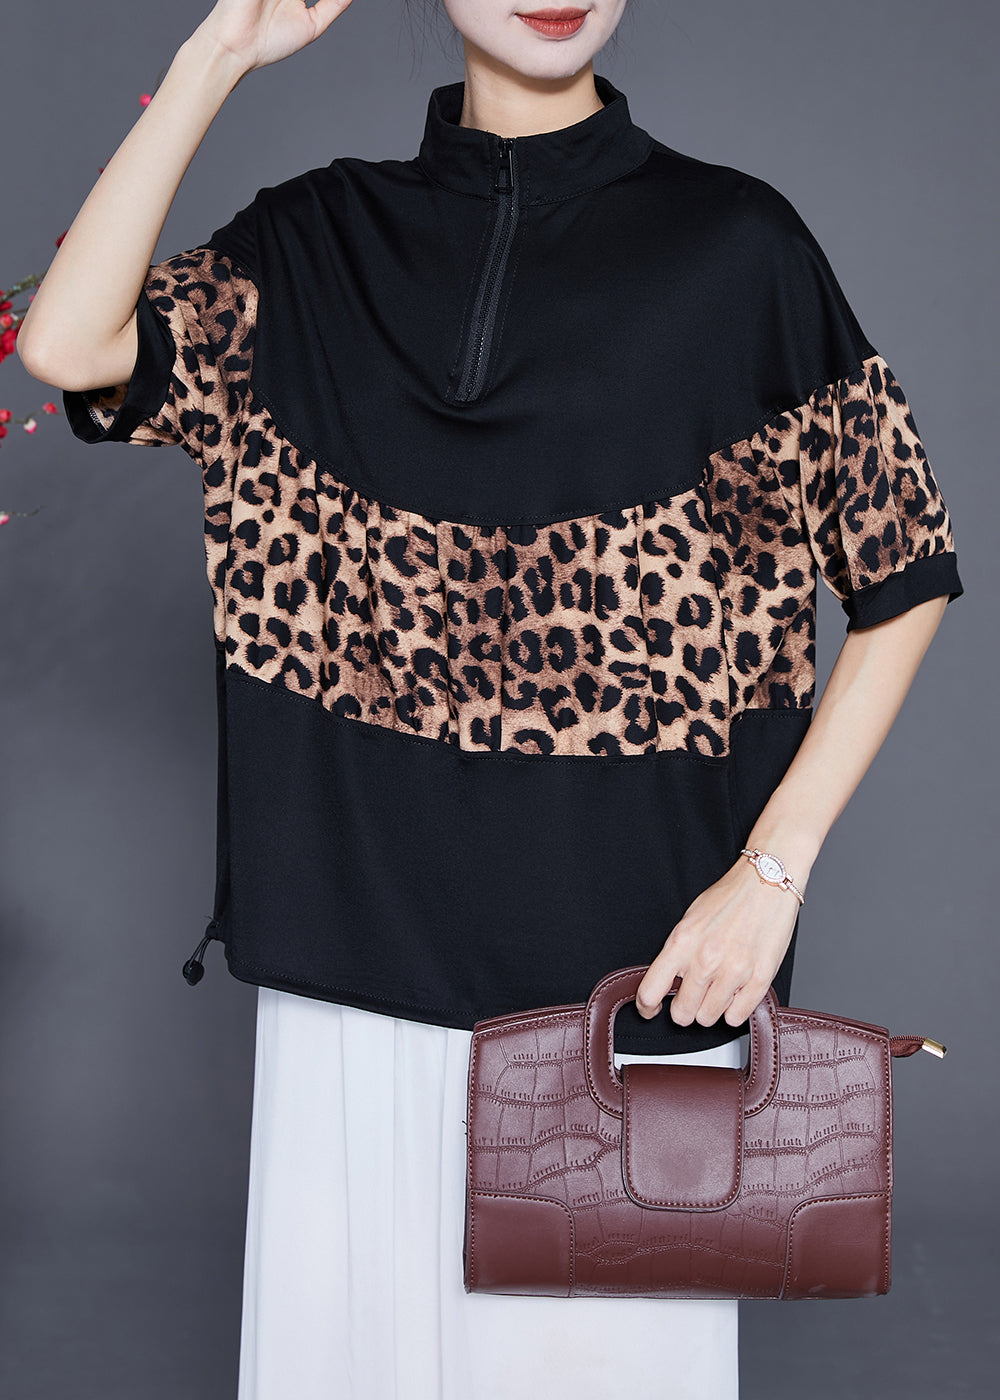 Black Patchwork Leopard Cotton Sweatshirts Top Drawstring Summer Ada Fashion